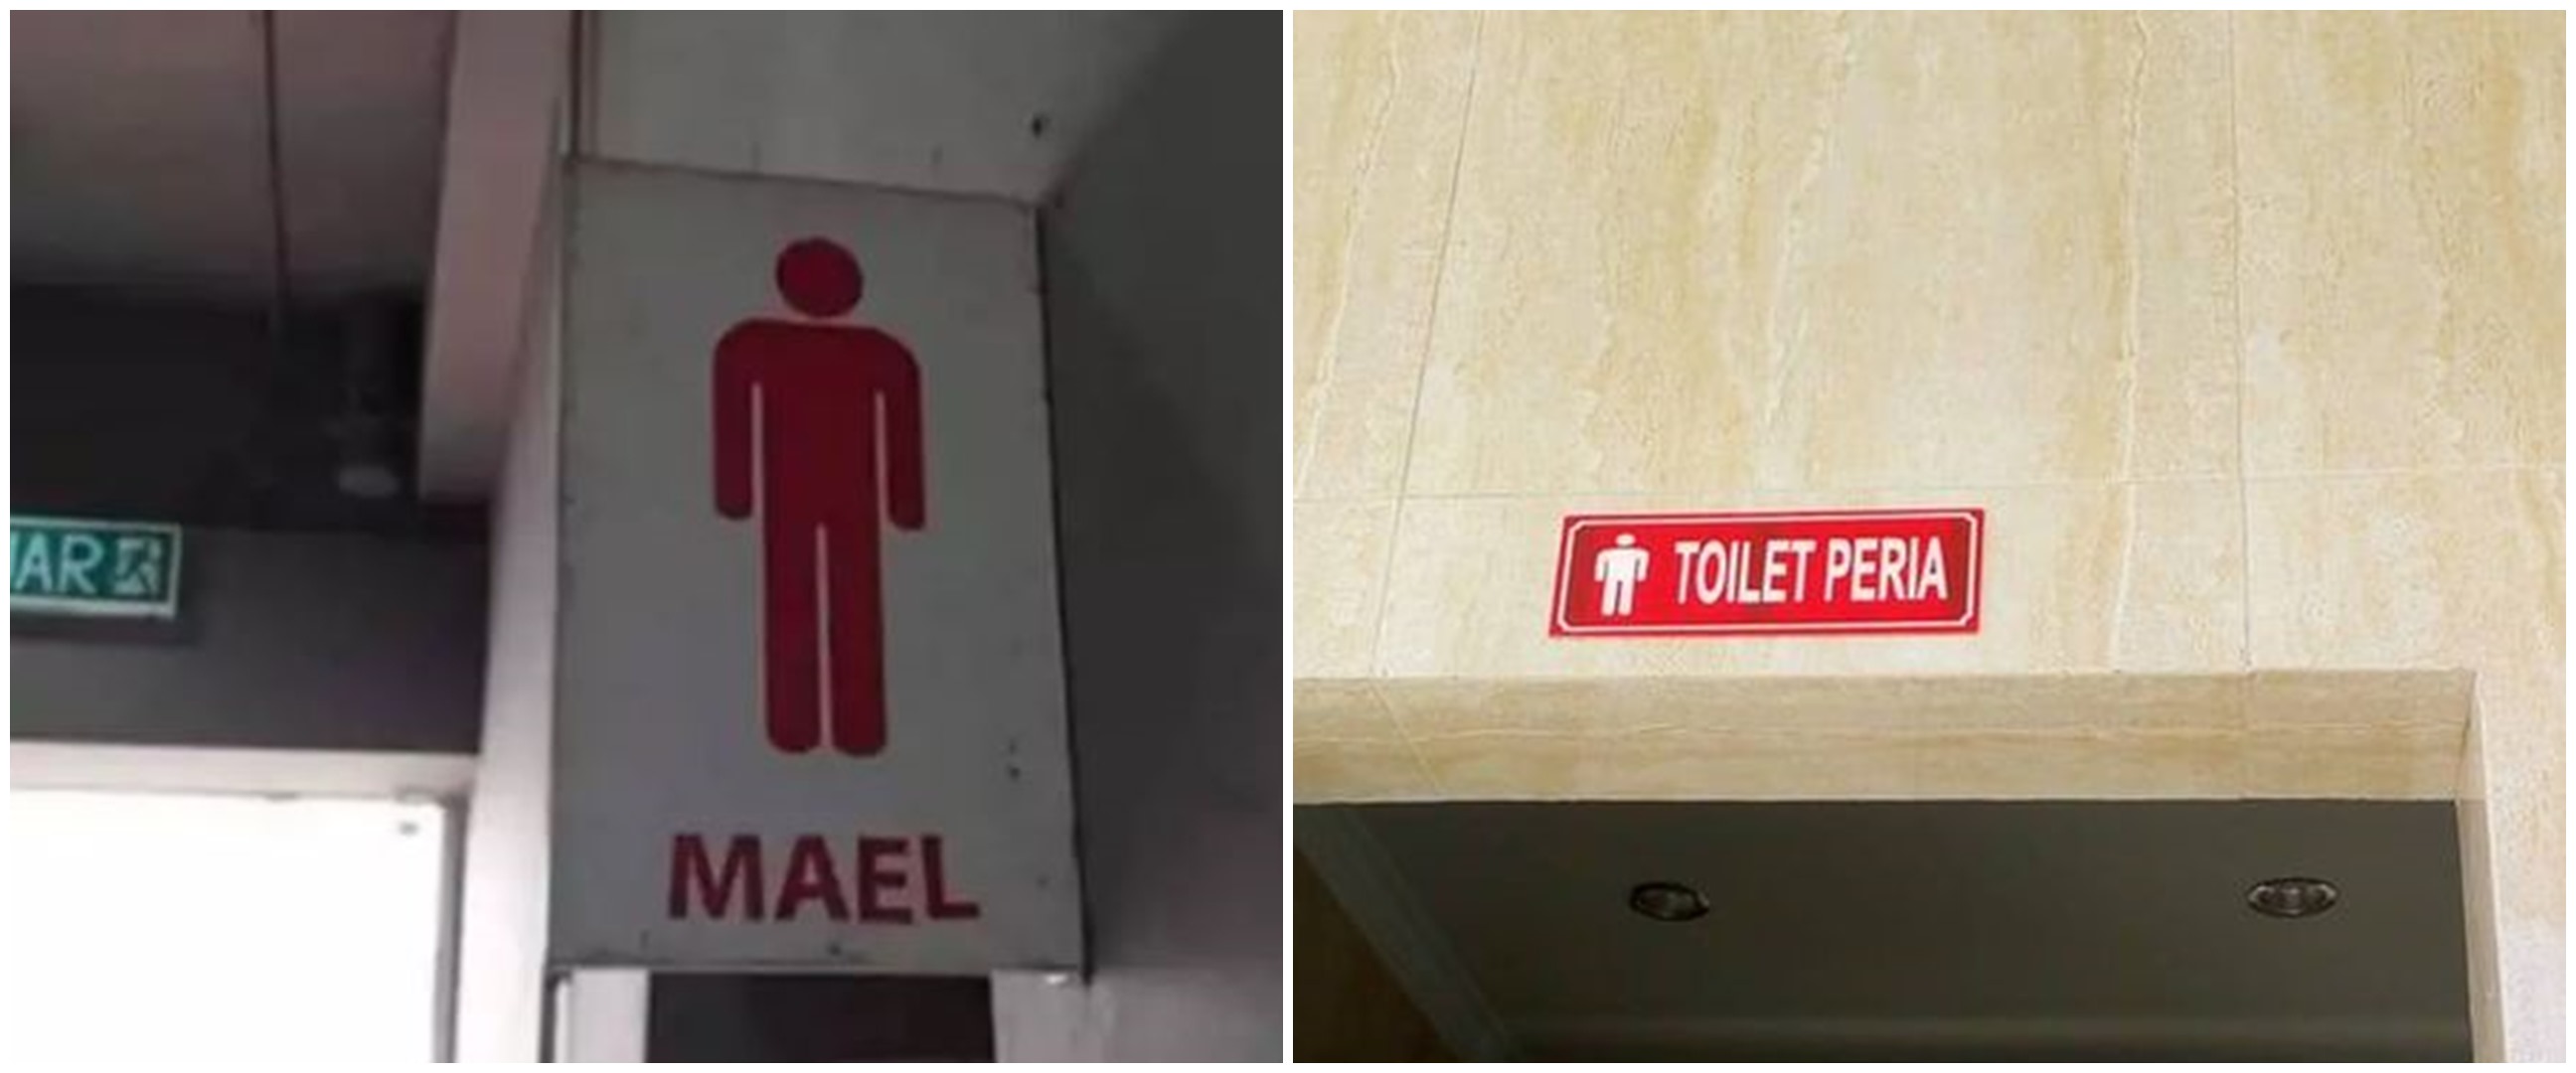 21 Potret kocak tanda petunjuk toilet ini nggak cuma kreatif tapi juga bikin cekikikan